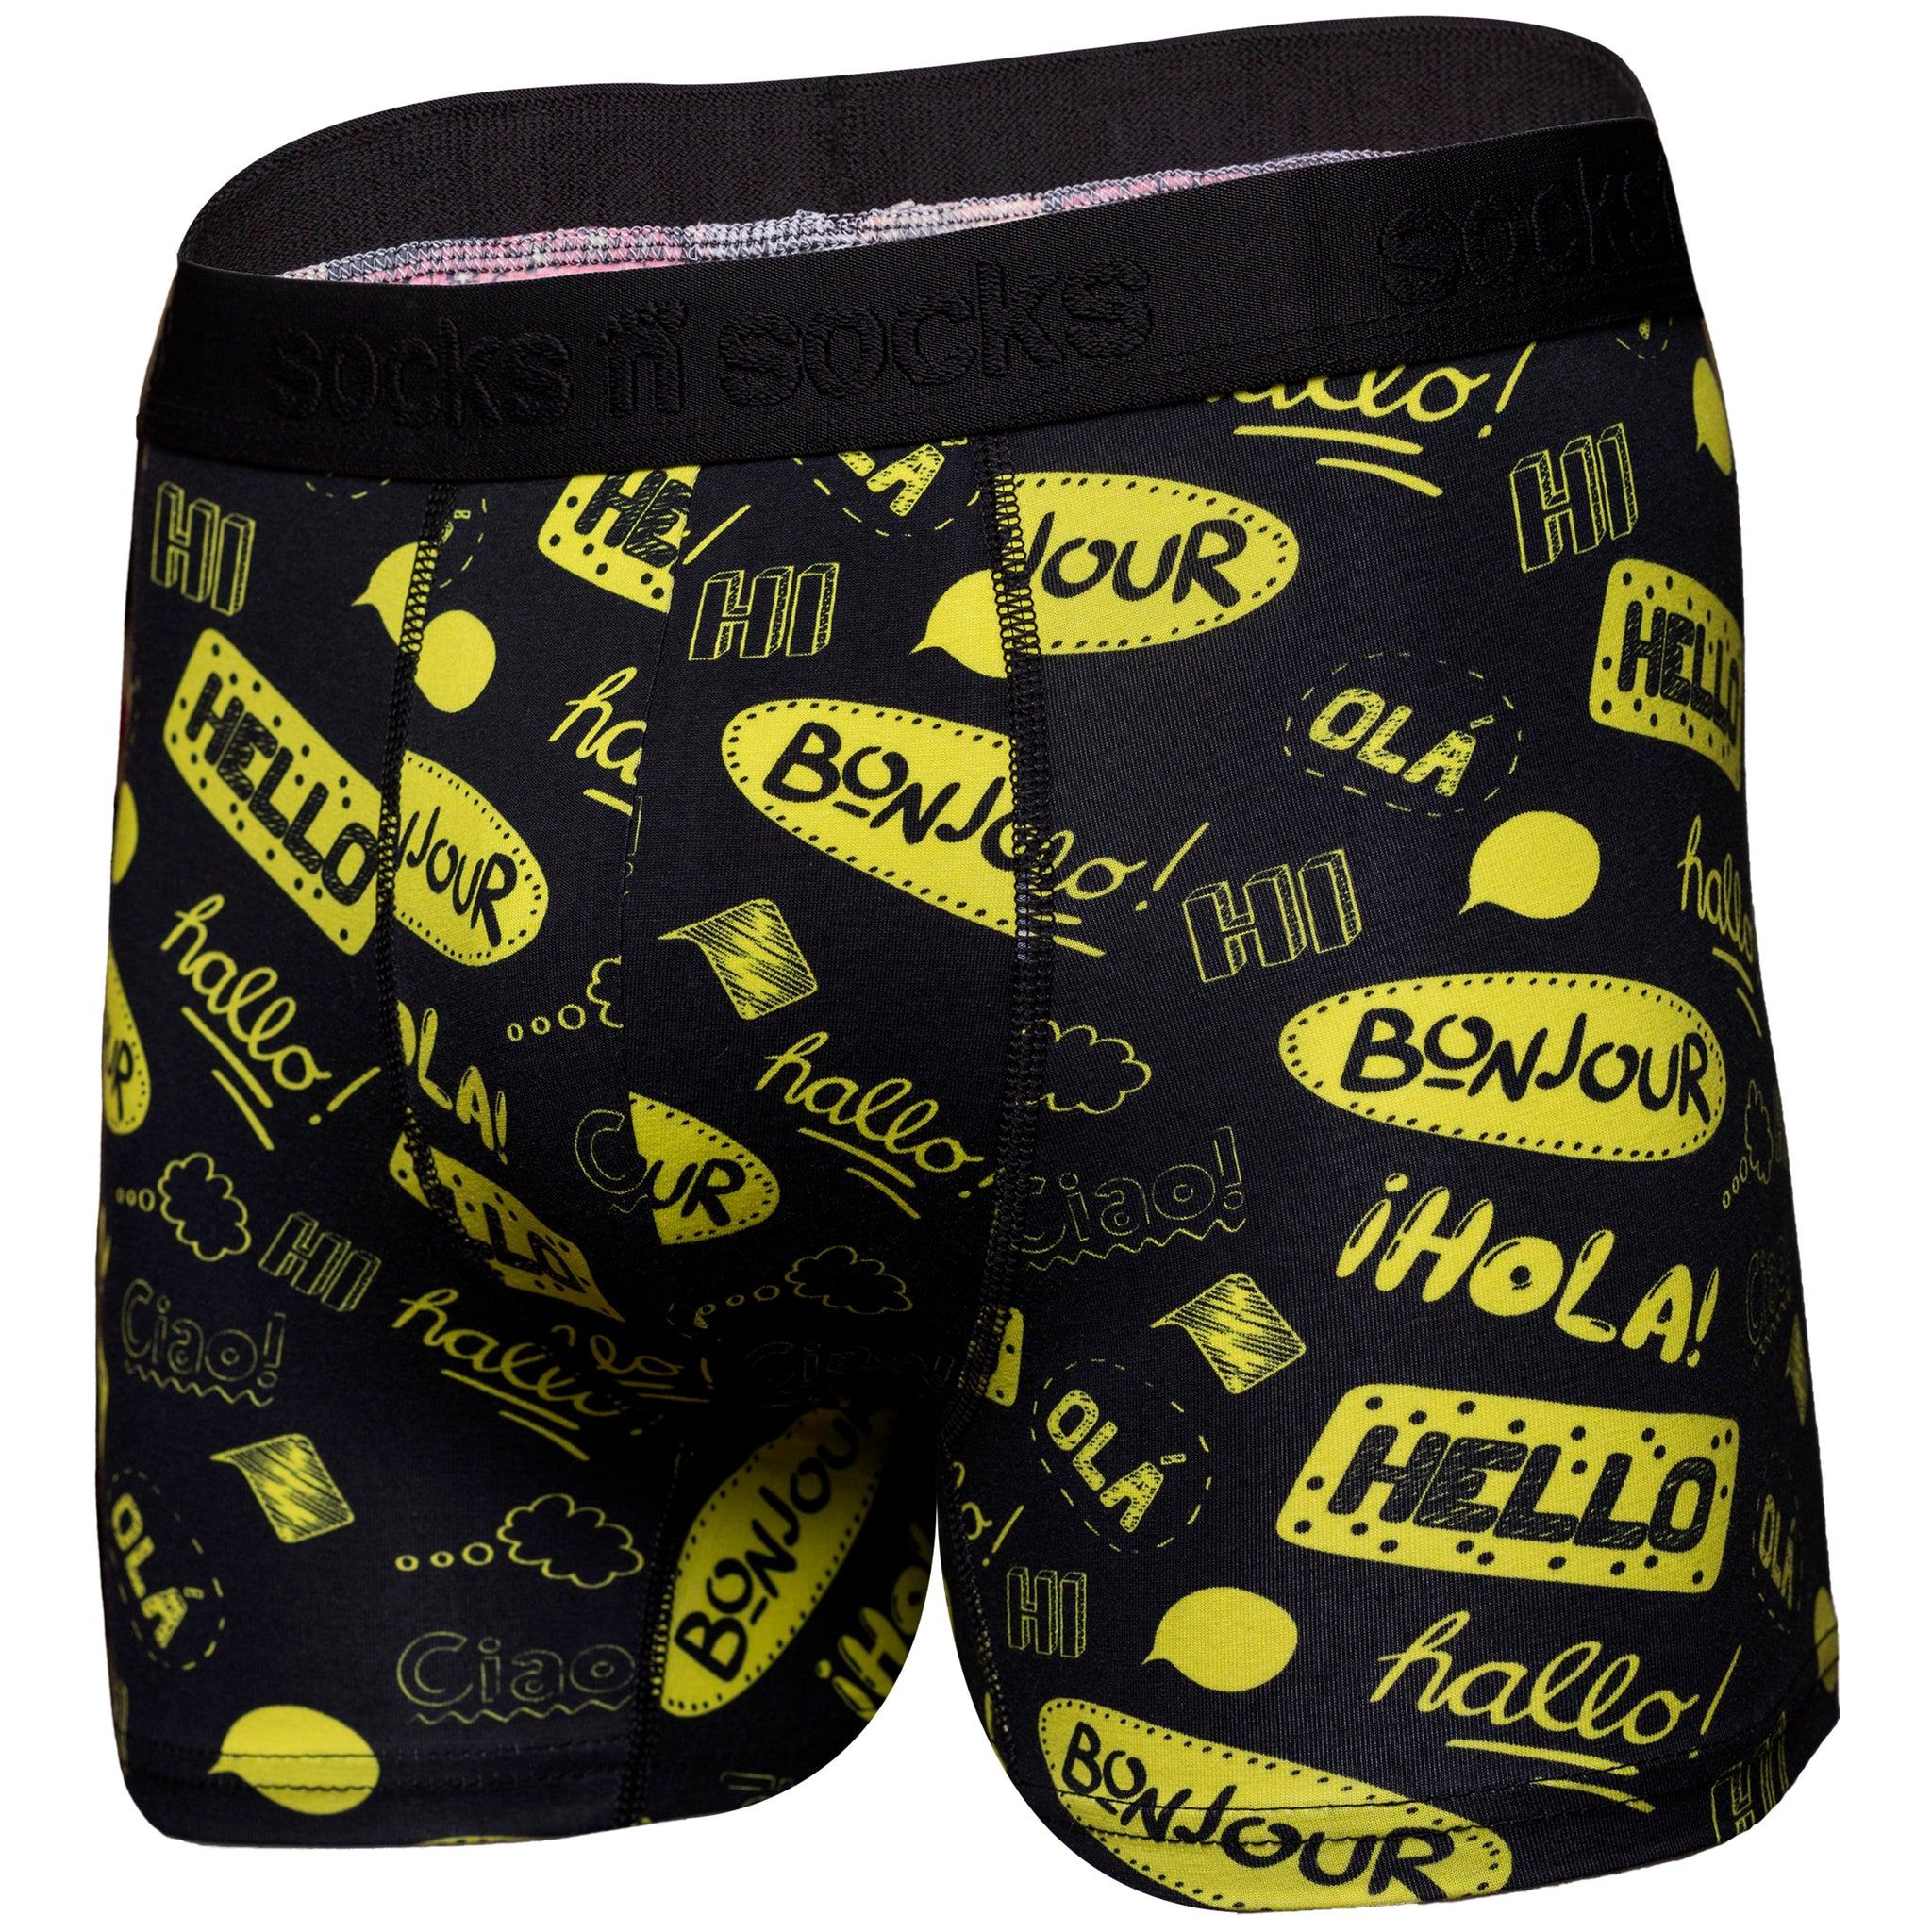 Men's Hello Boxer Brief black and yellow